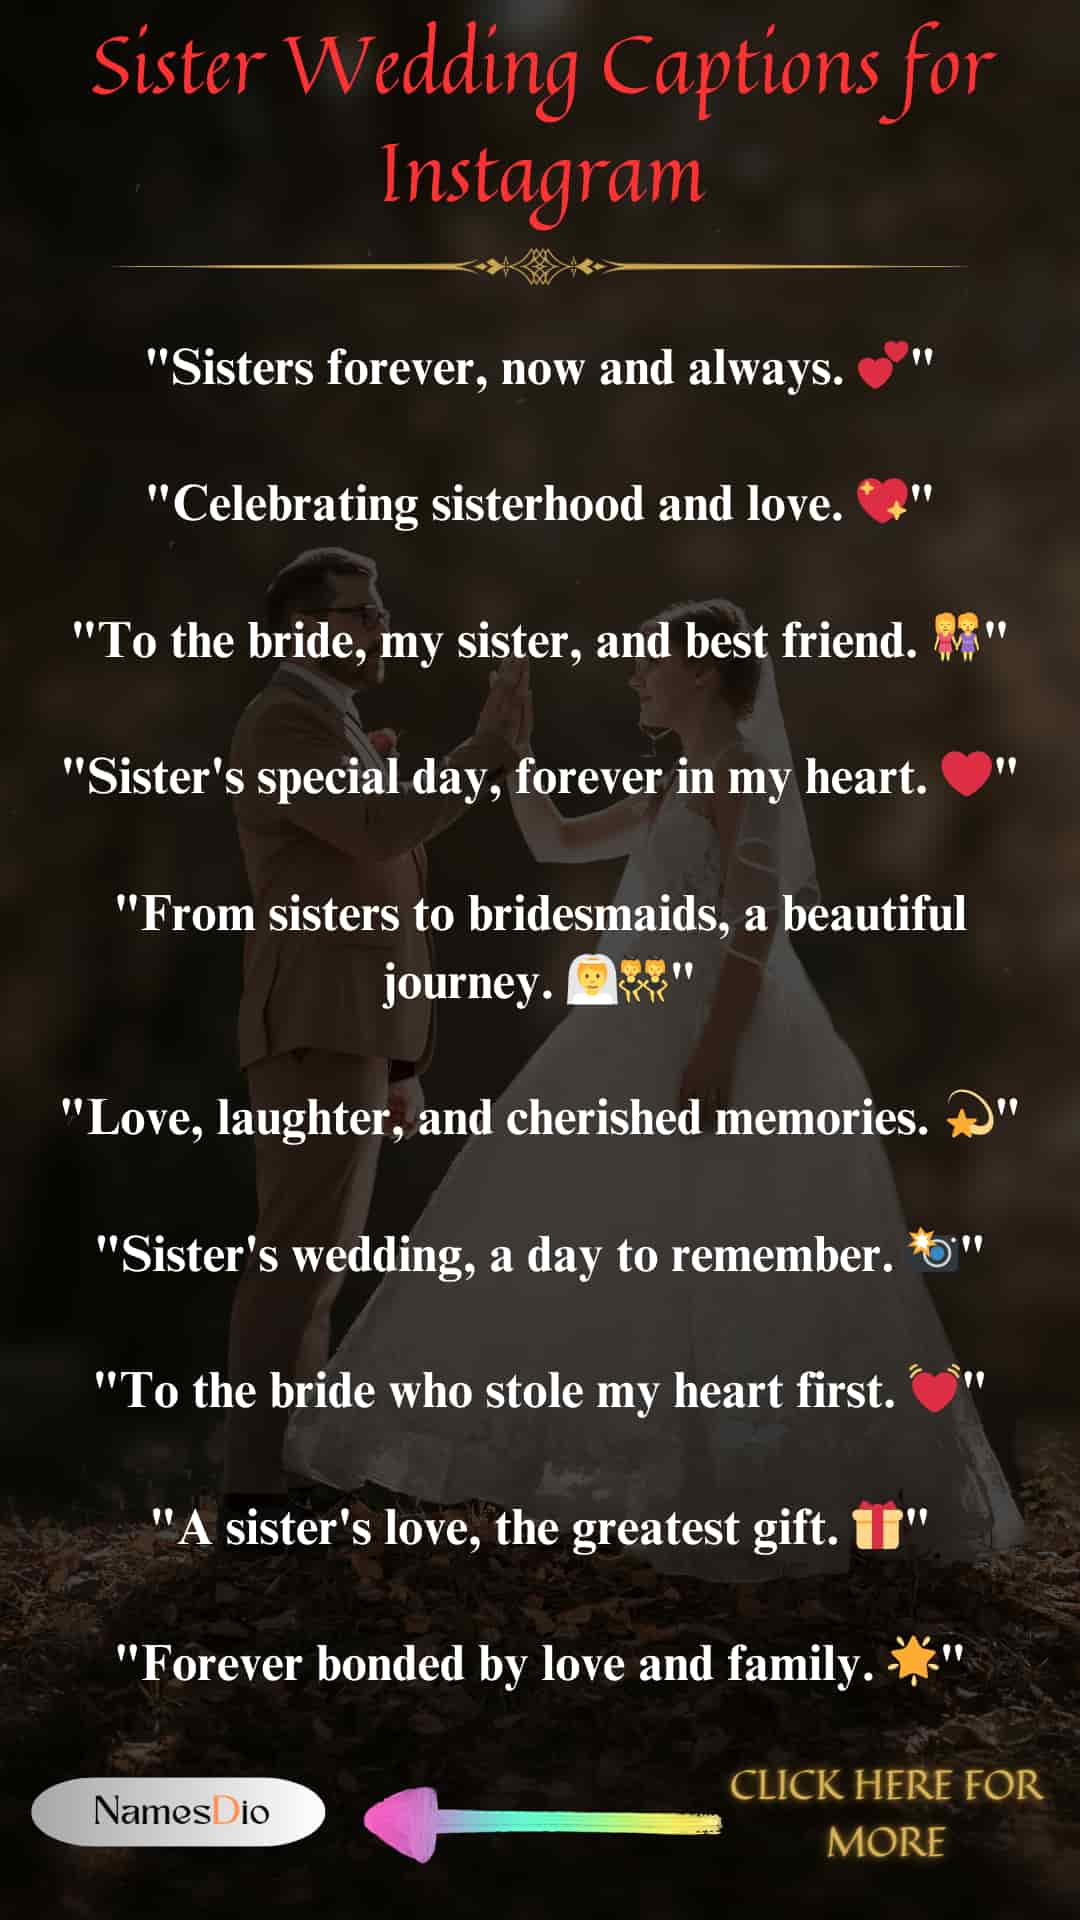 Sister-Wedding-Captions-for-Instagram